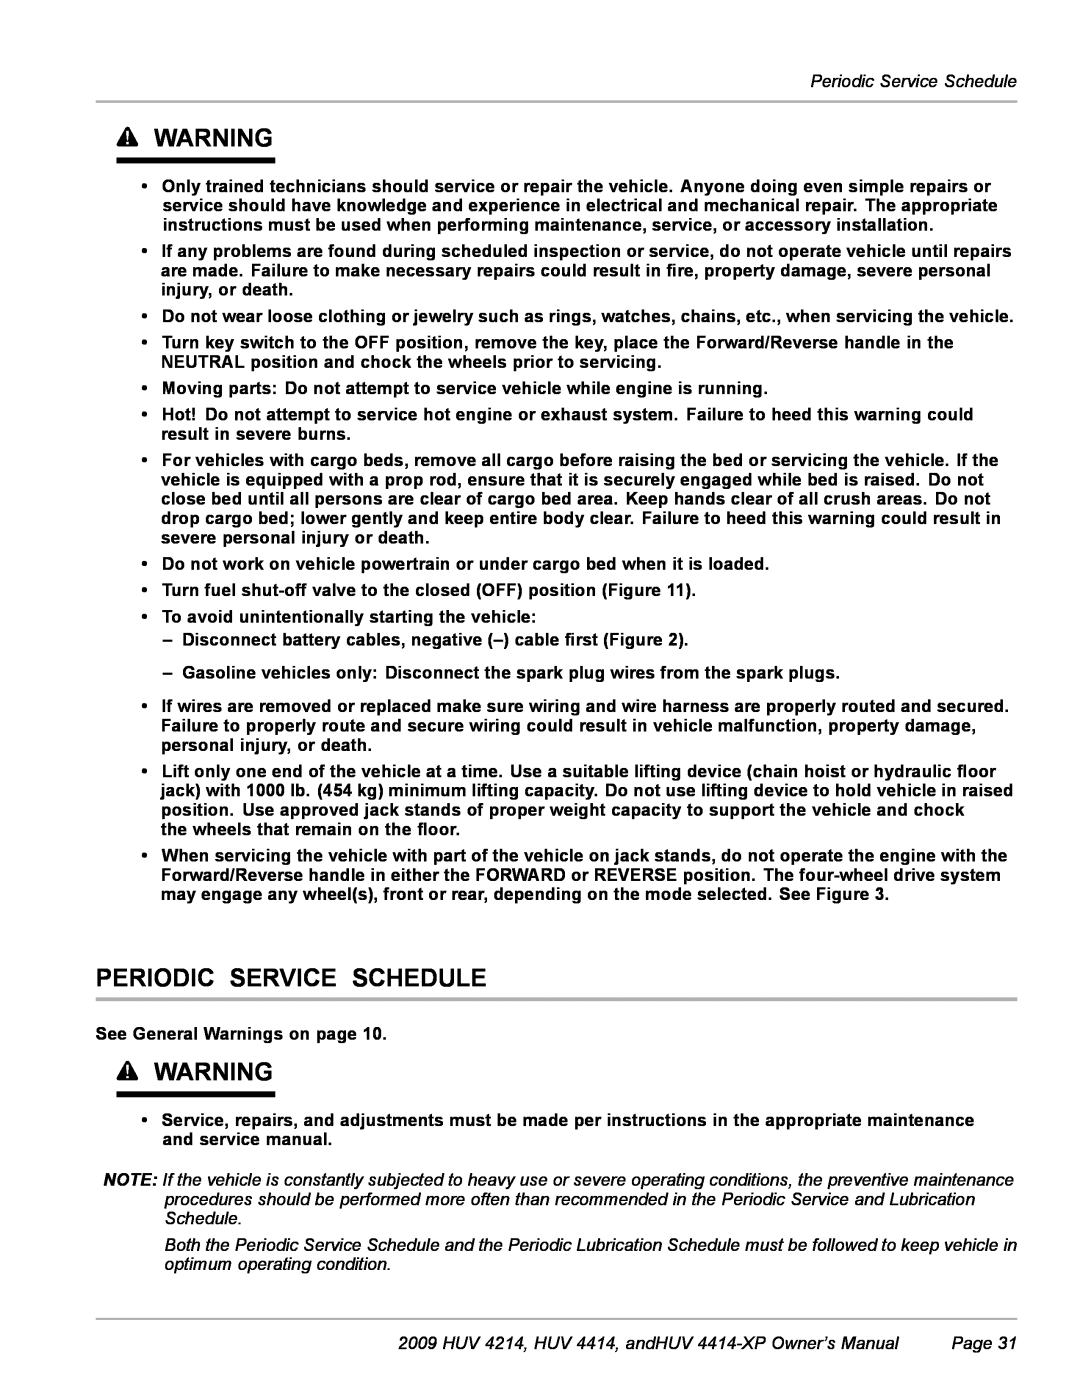 Husqvarna owner manual Periodic Service Schedule, HUV 4214, HUV 4414, andHUV 4414-XP Owner’s Manual, Page 